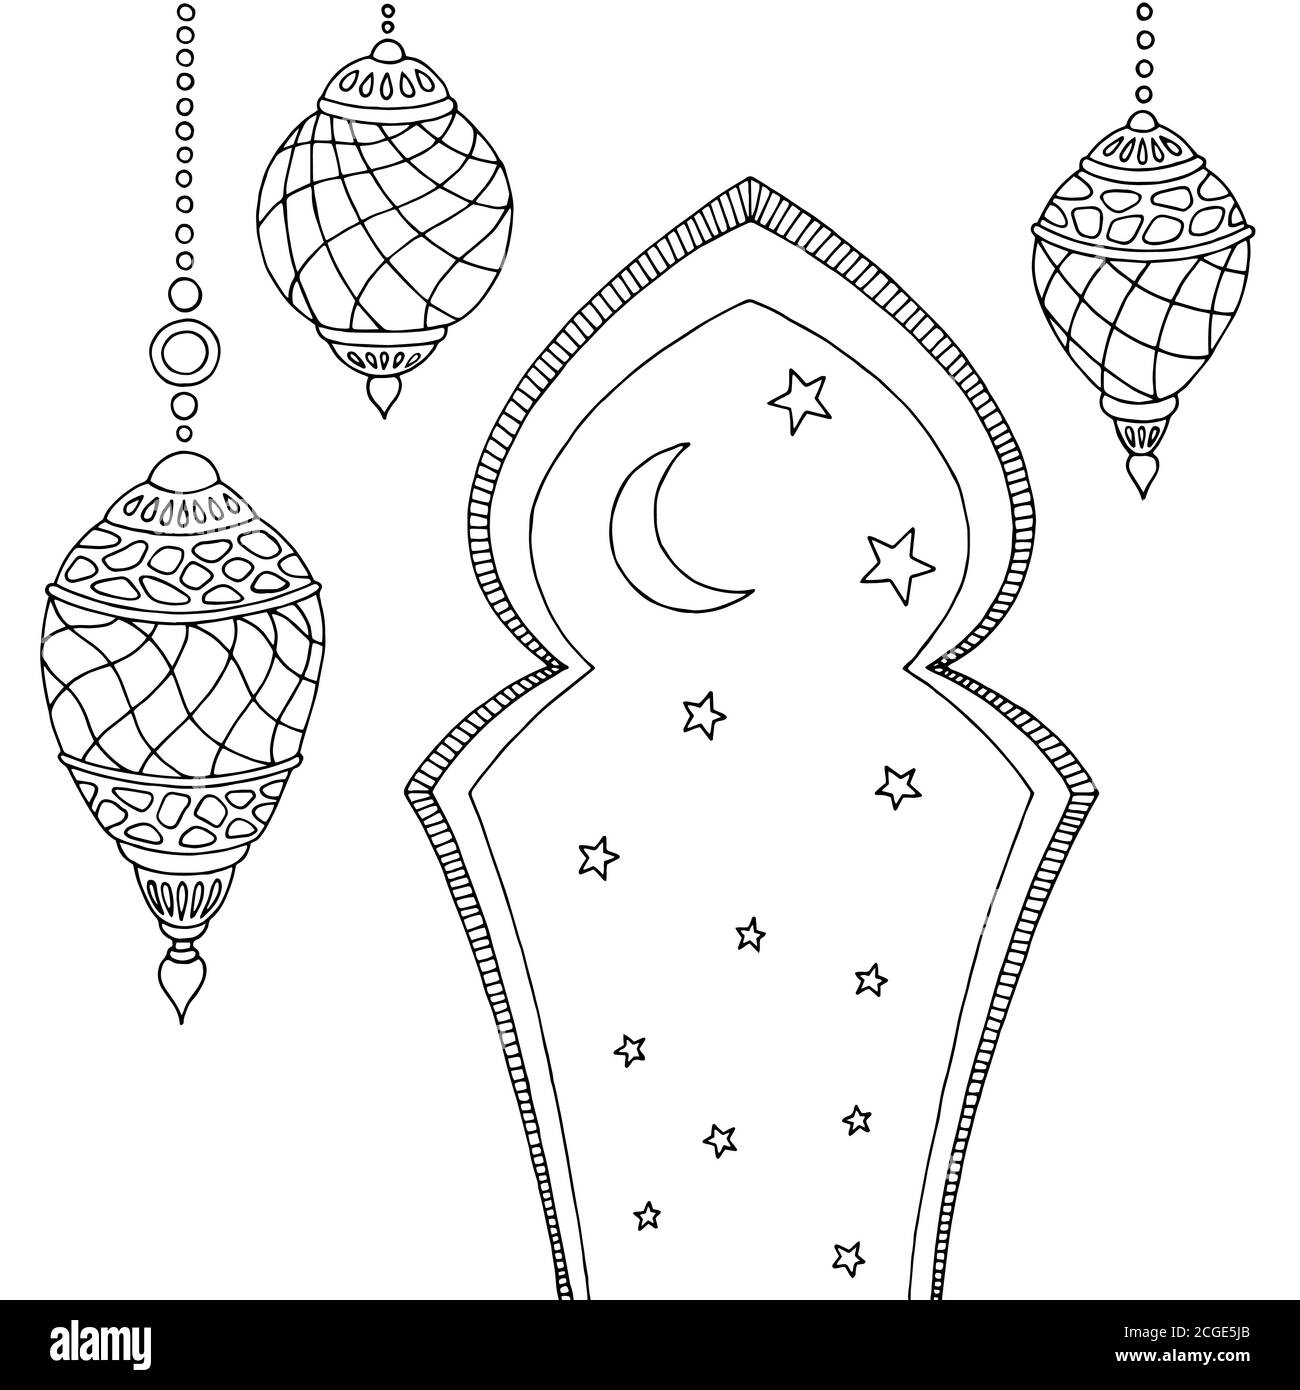 Ramadan lamps graphic moon star black white sketch illustration vector Stock Vector